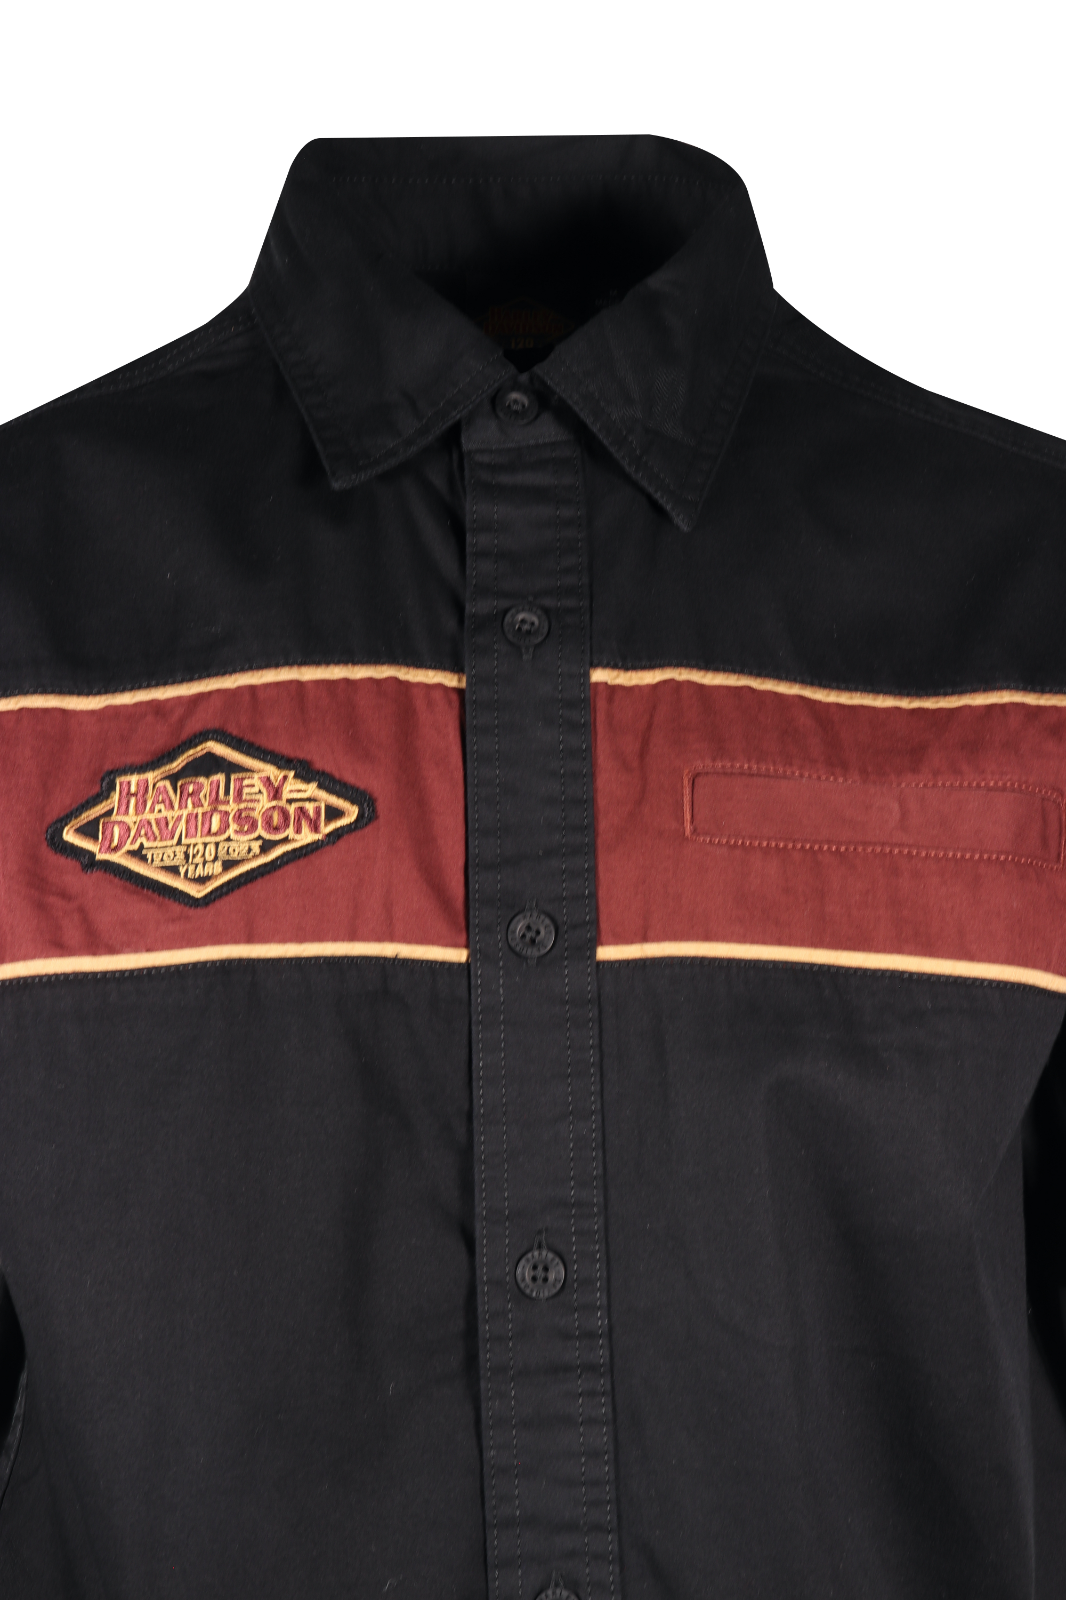 Harley-Davidson Men's Black Beauty 120 Anniversary Mechanic Shirt Woven S/S 506